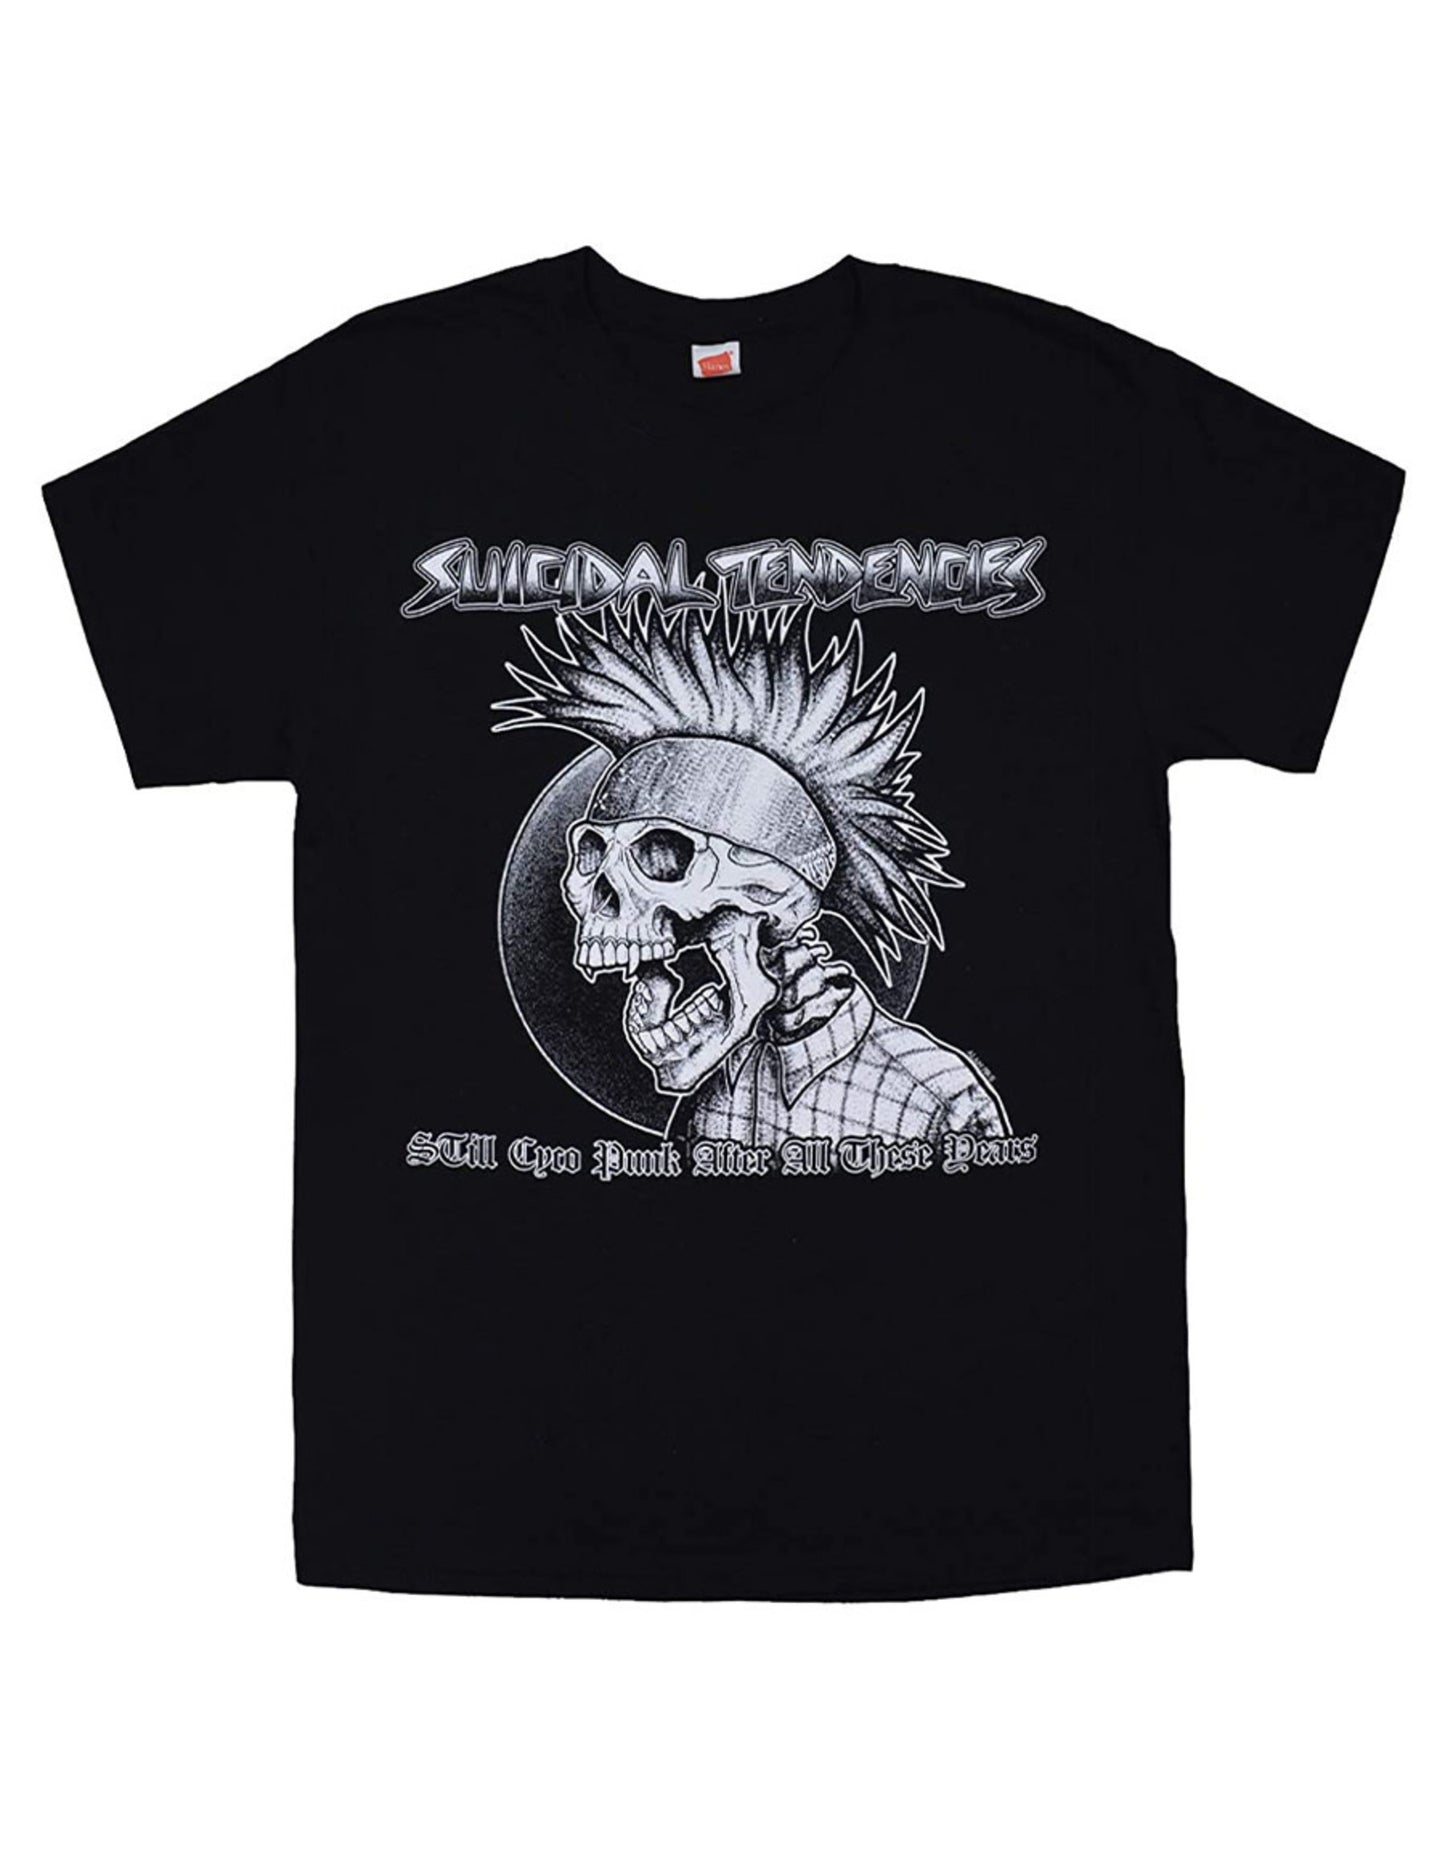 Suicidal Tendencies "Still Cyco Punk" T-Shirt